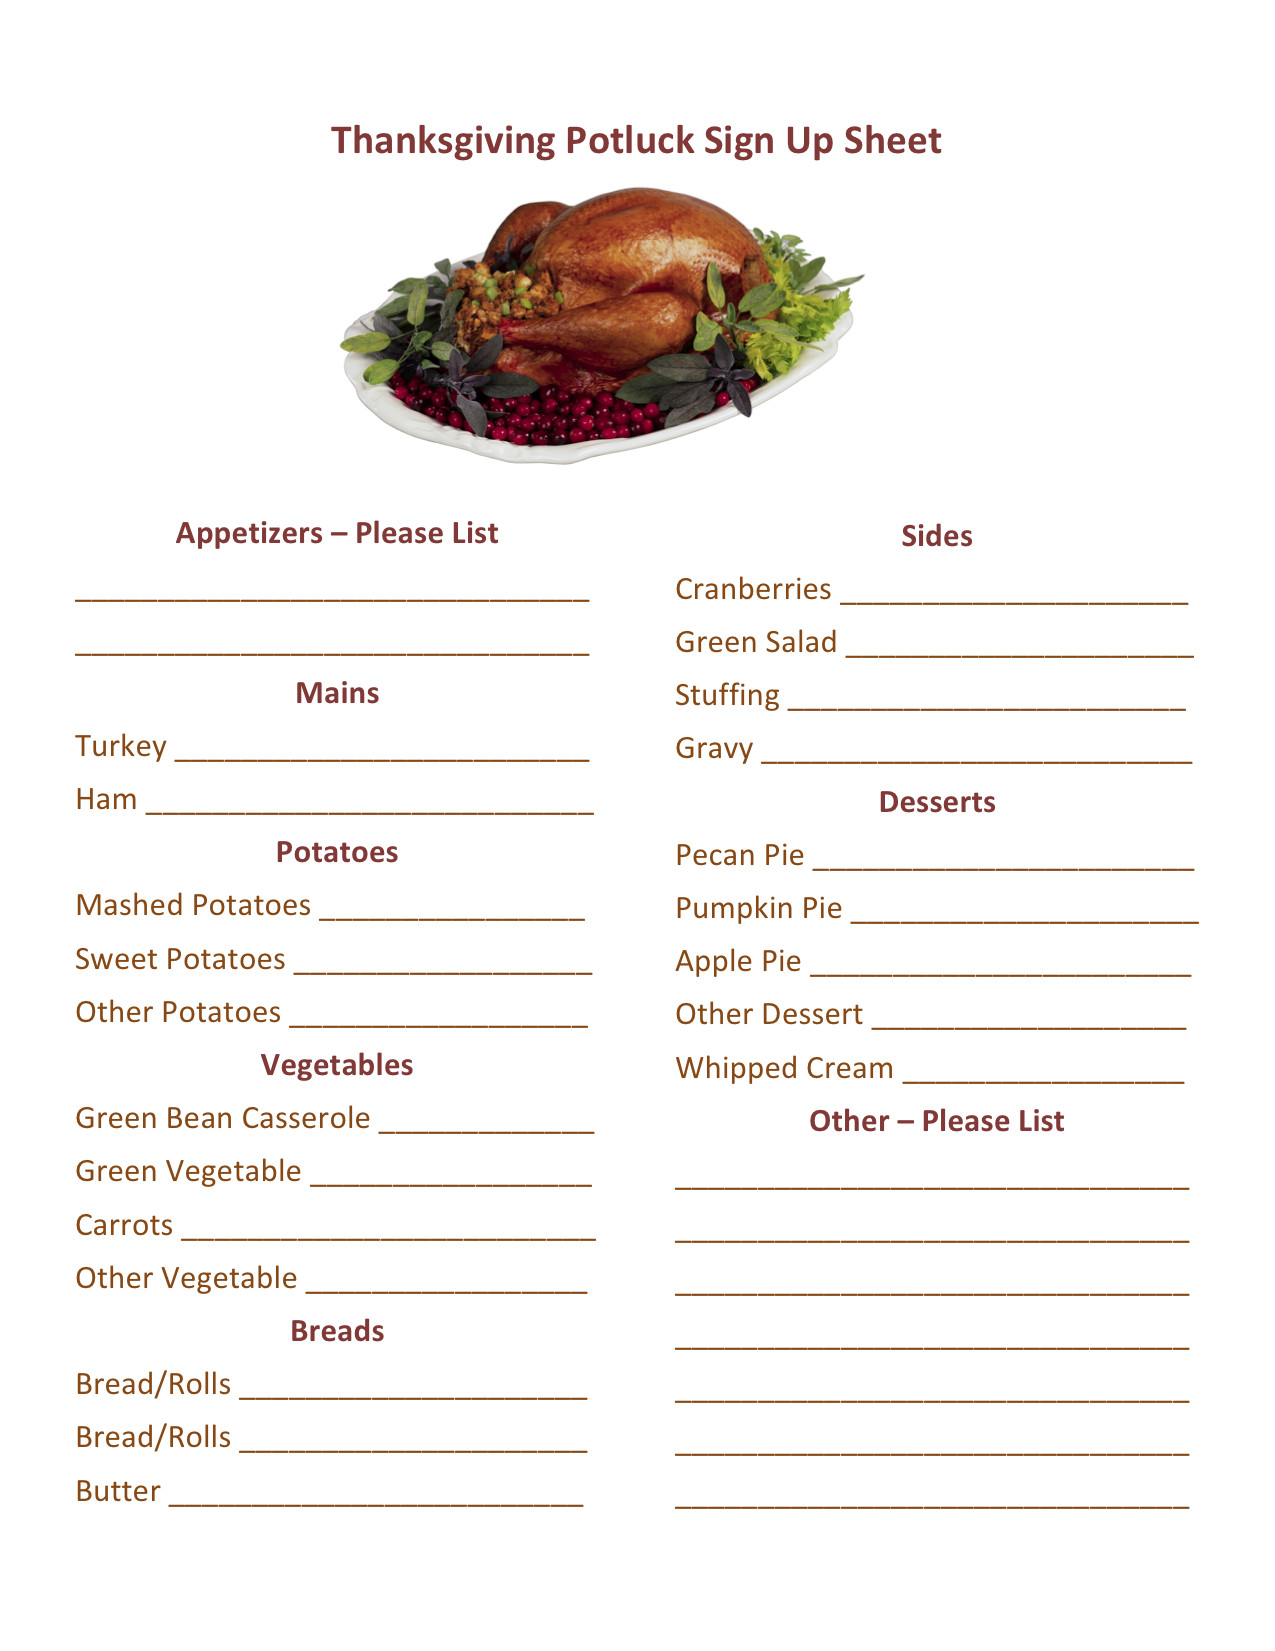 Christmas Potluck Signup Sheet Thanksgiving Potluck Sign Up Printable